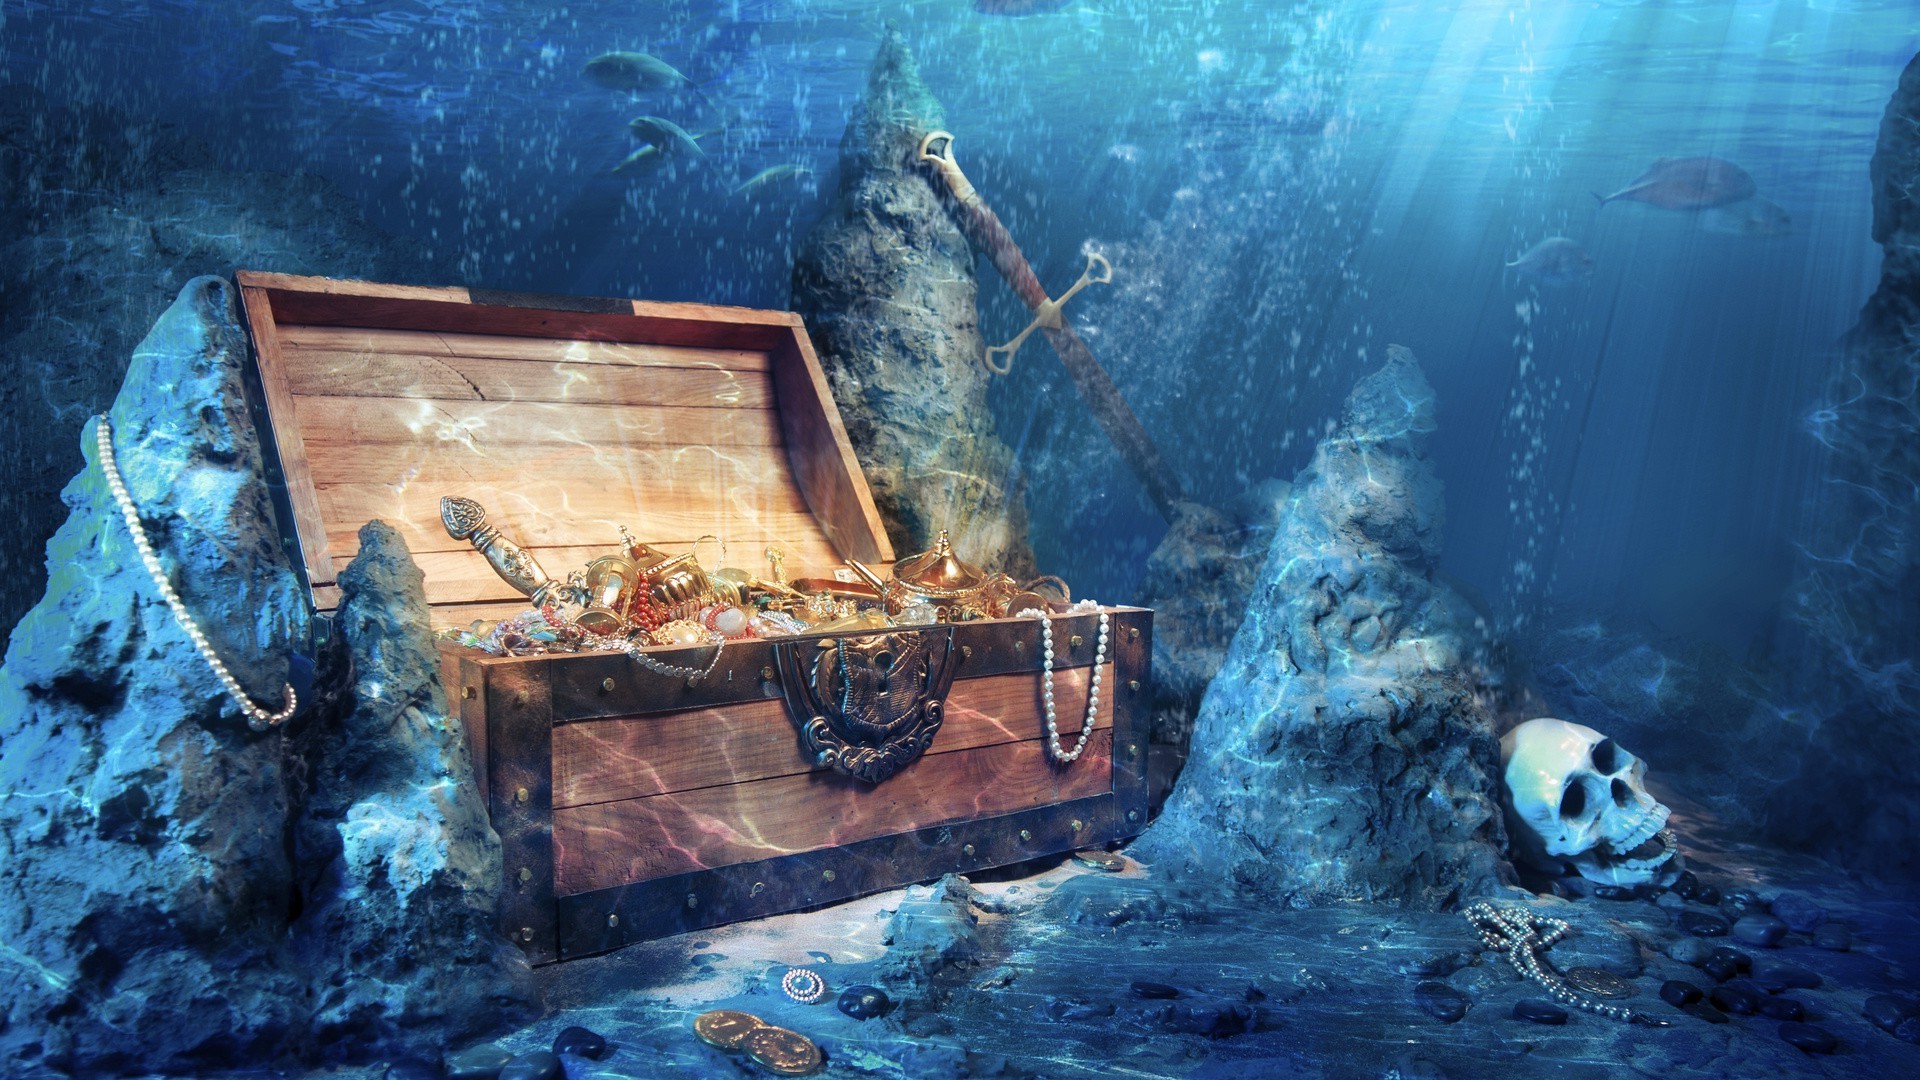 marine life water underwater shipwreck fish one calamity recreation ocean vehicle travel exploration